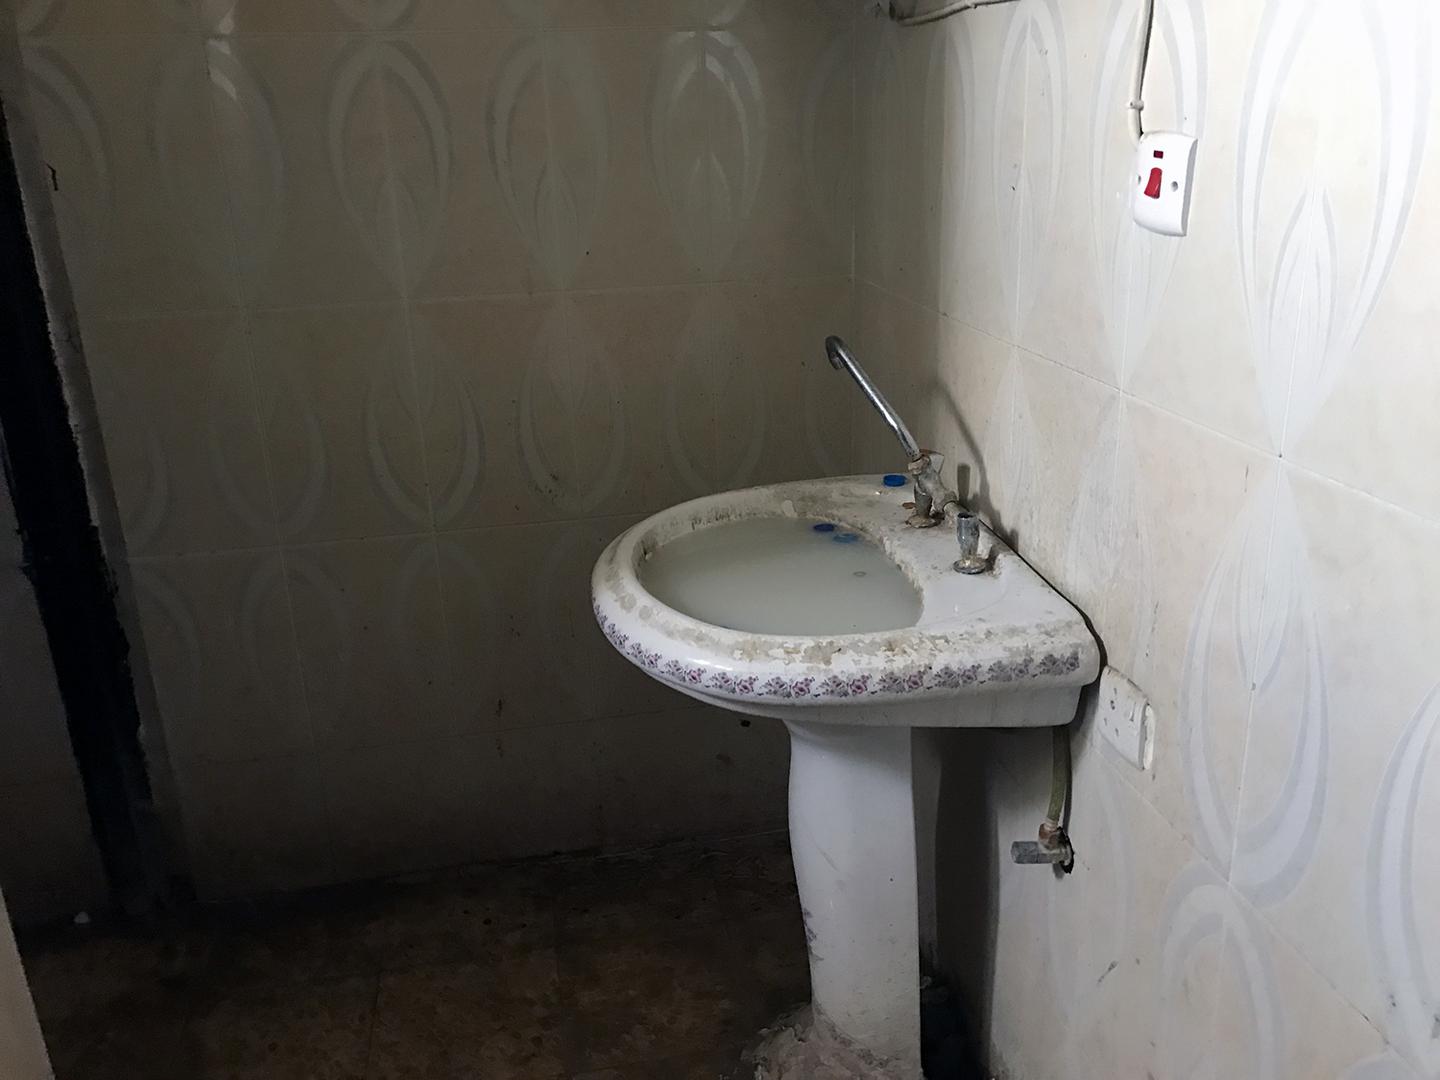 Dirty water blocks both sinks in the bathroom of Hammam al-Alil prison.